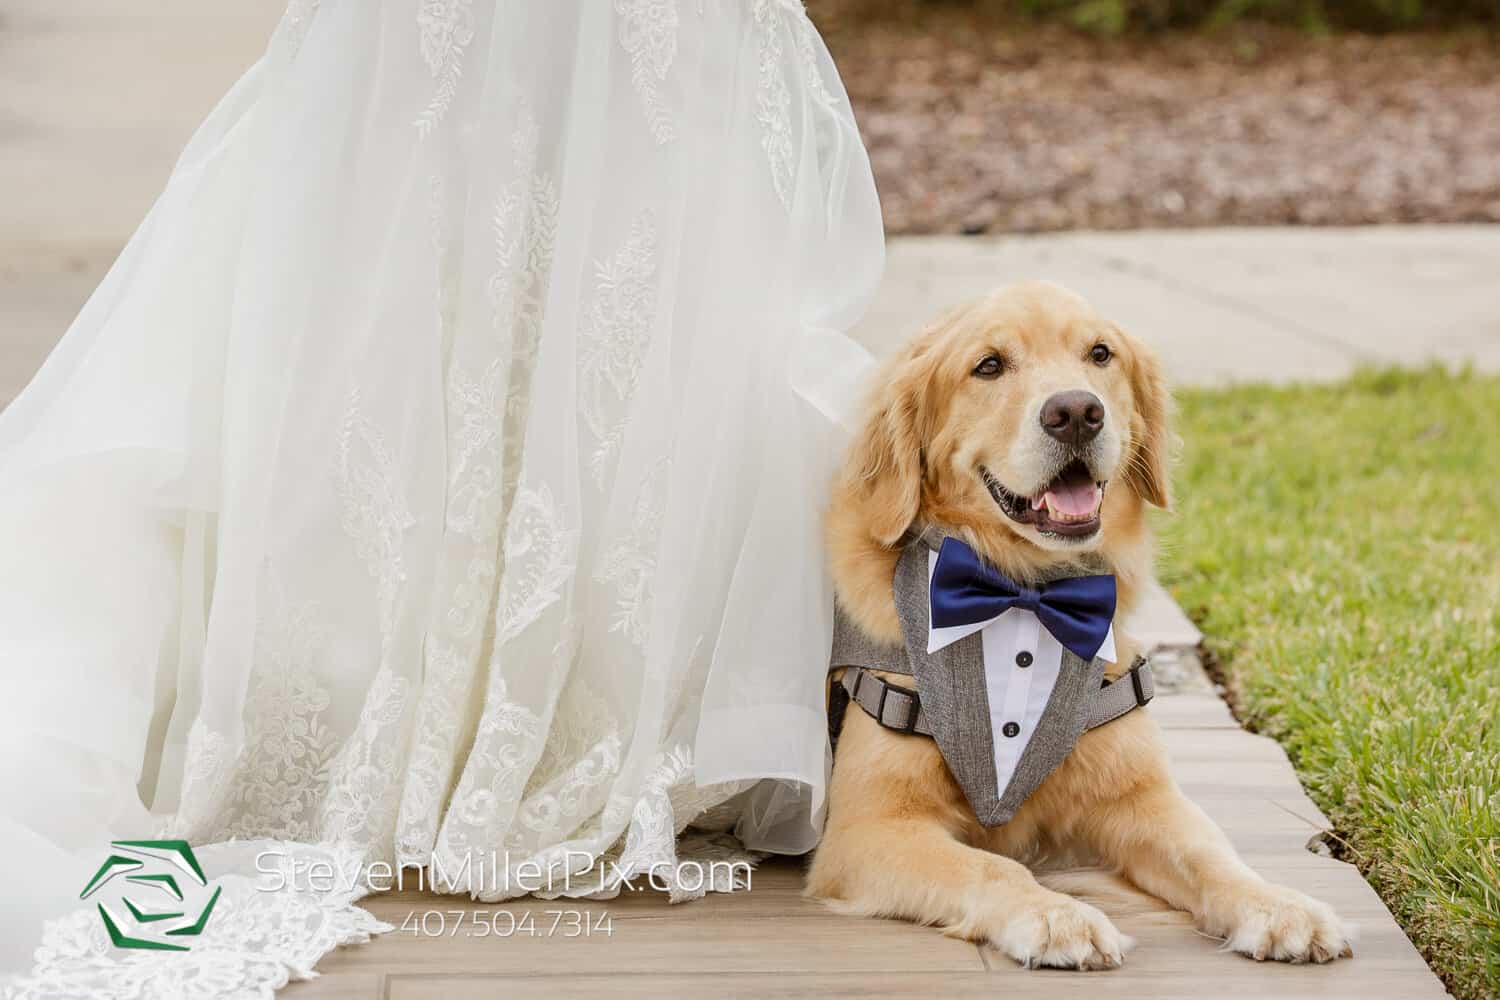 November Wedding - Just Marry Weddings - Steven Miller Photography - Dog